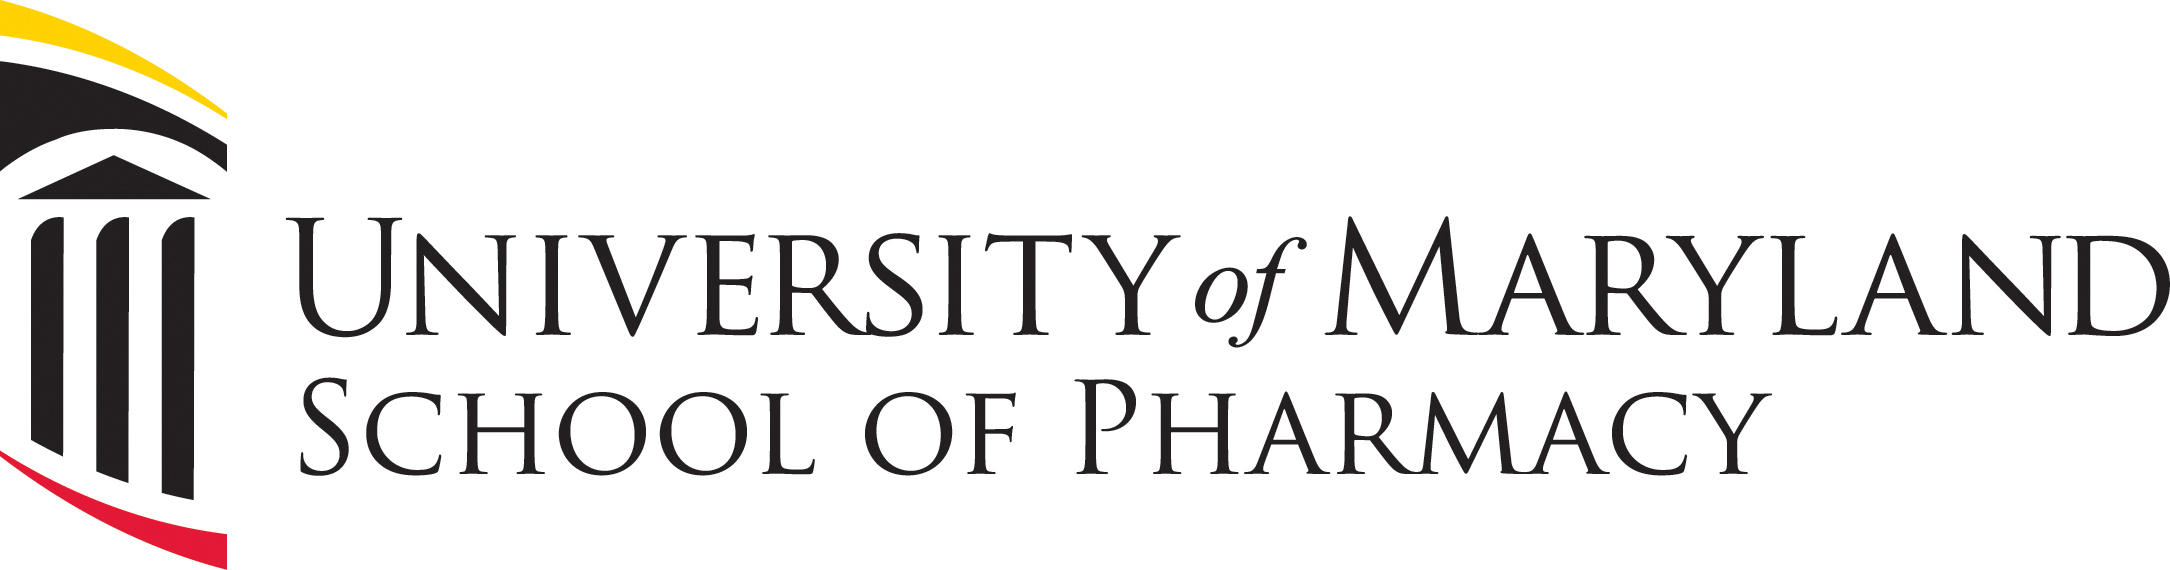 School of Pharmacy logo